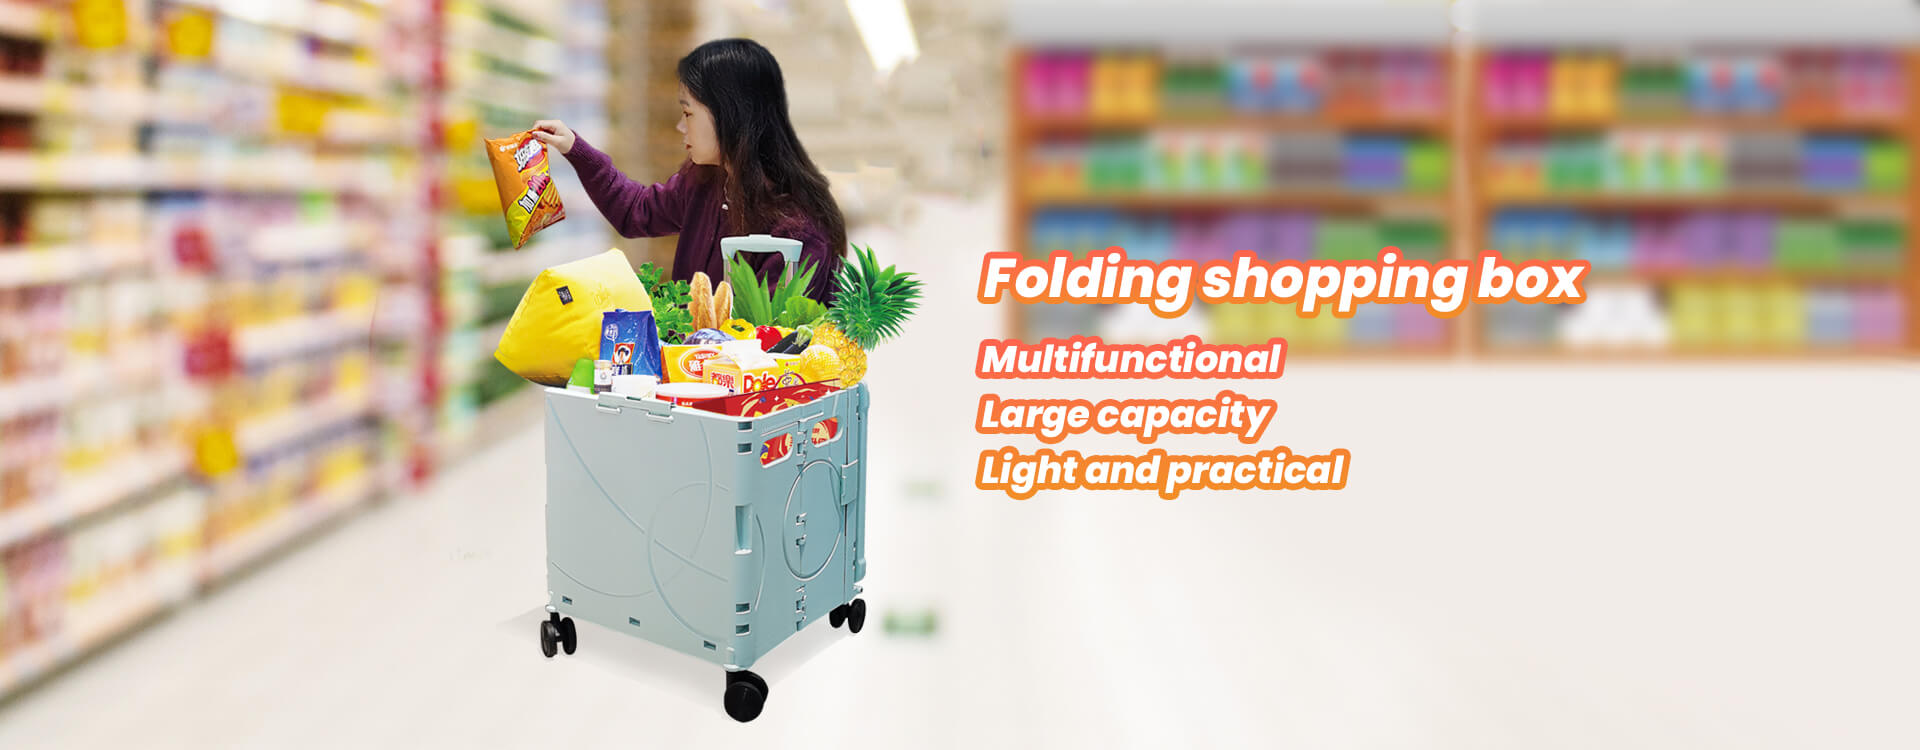 Folding-shopping-box